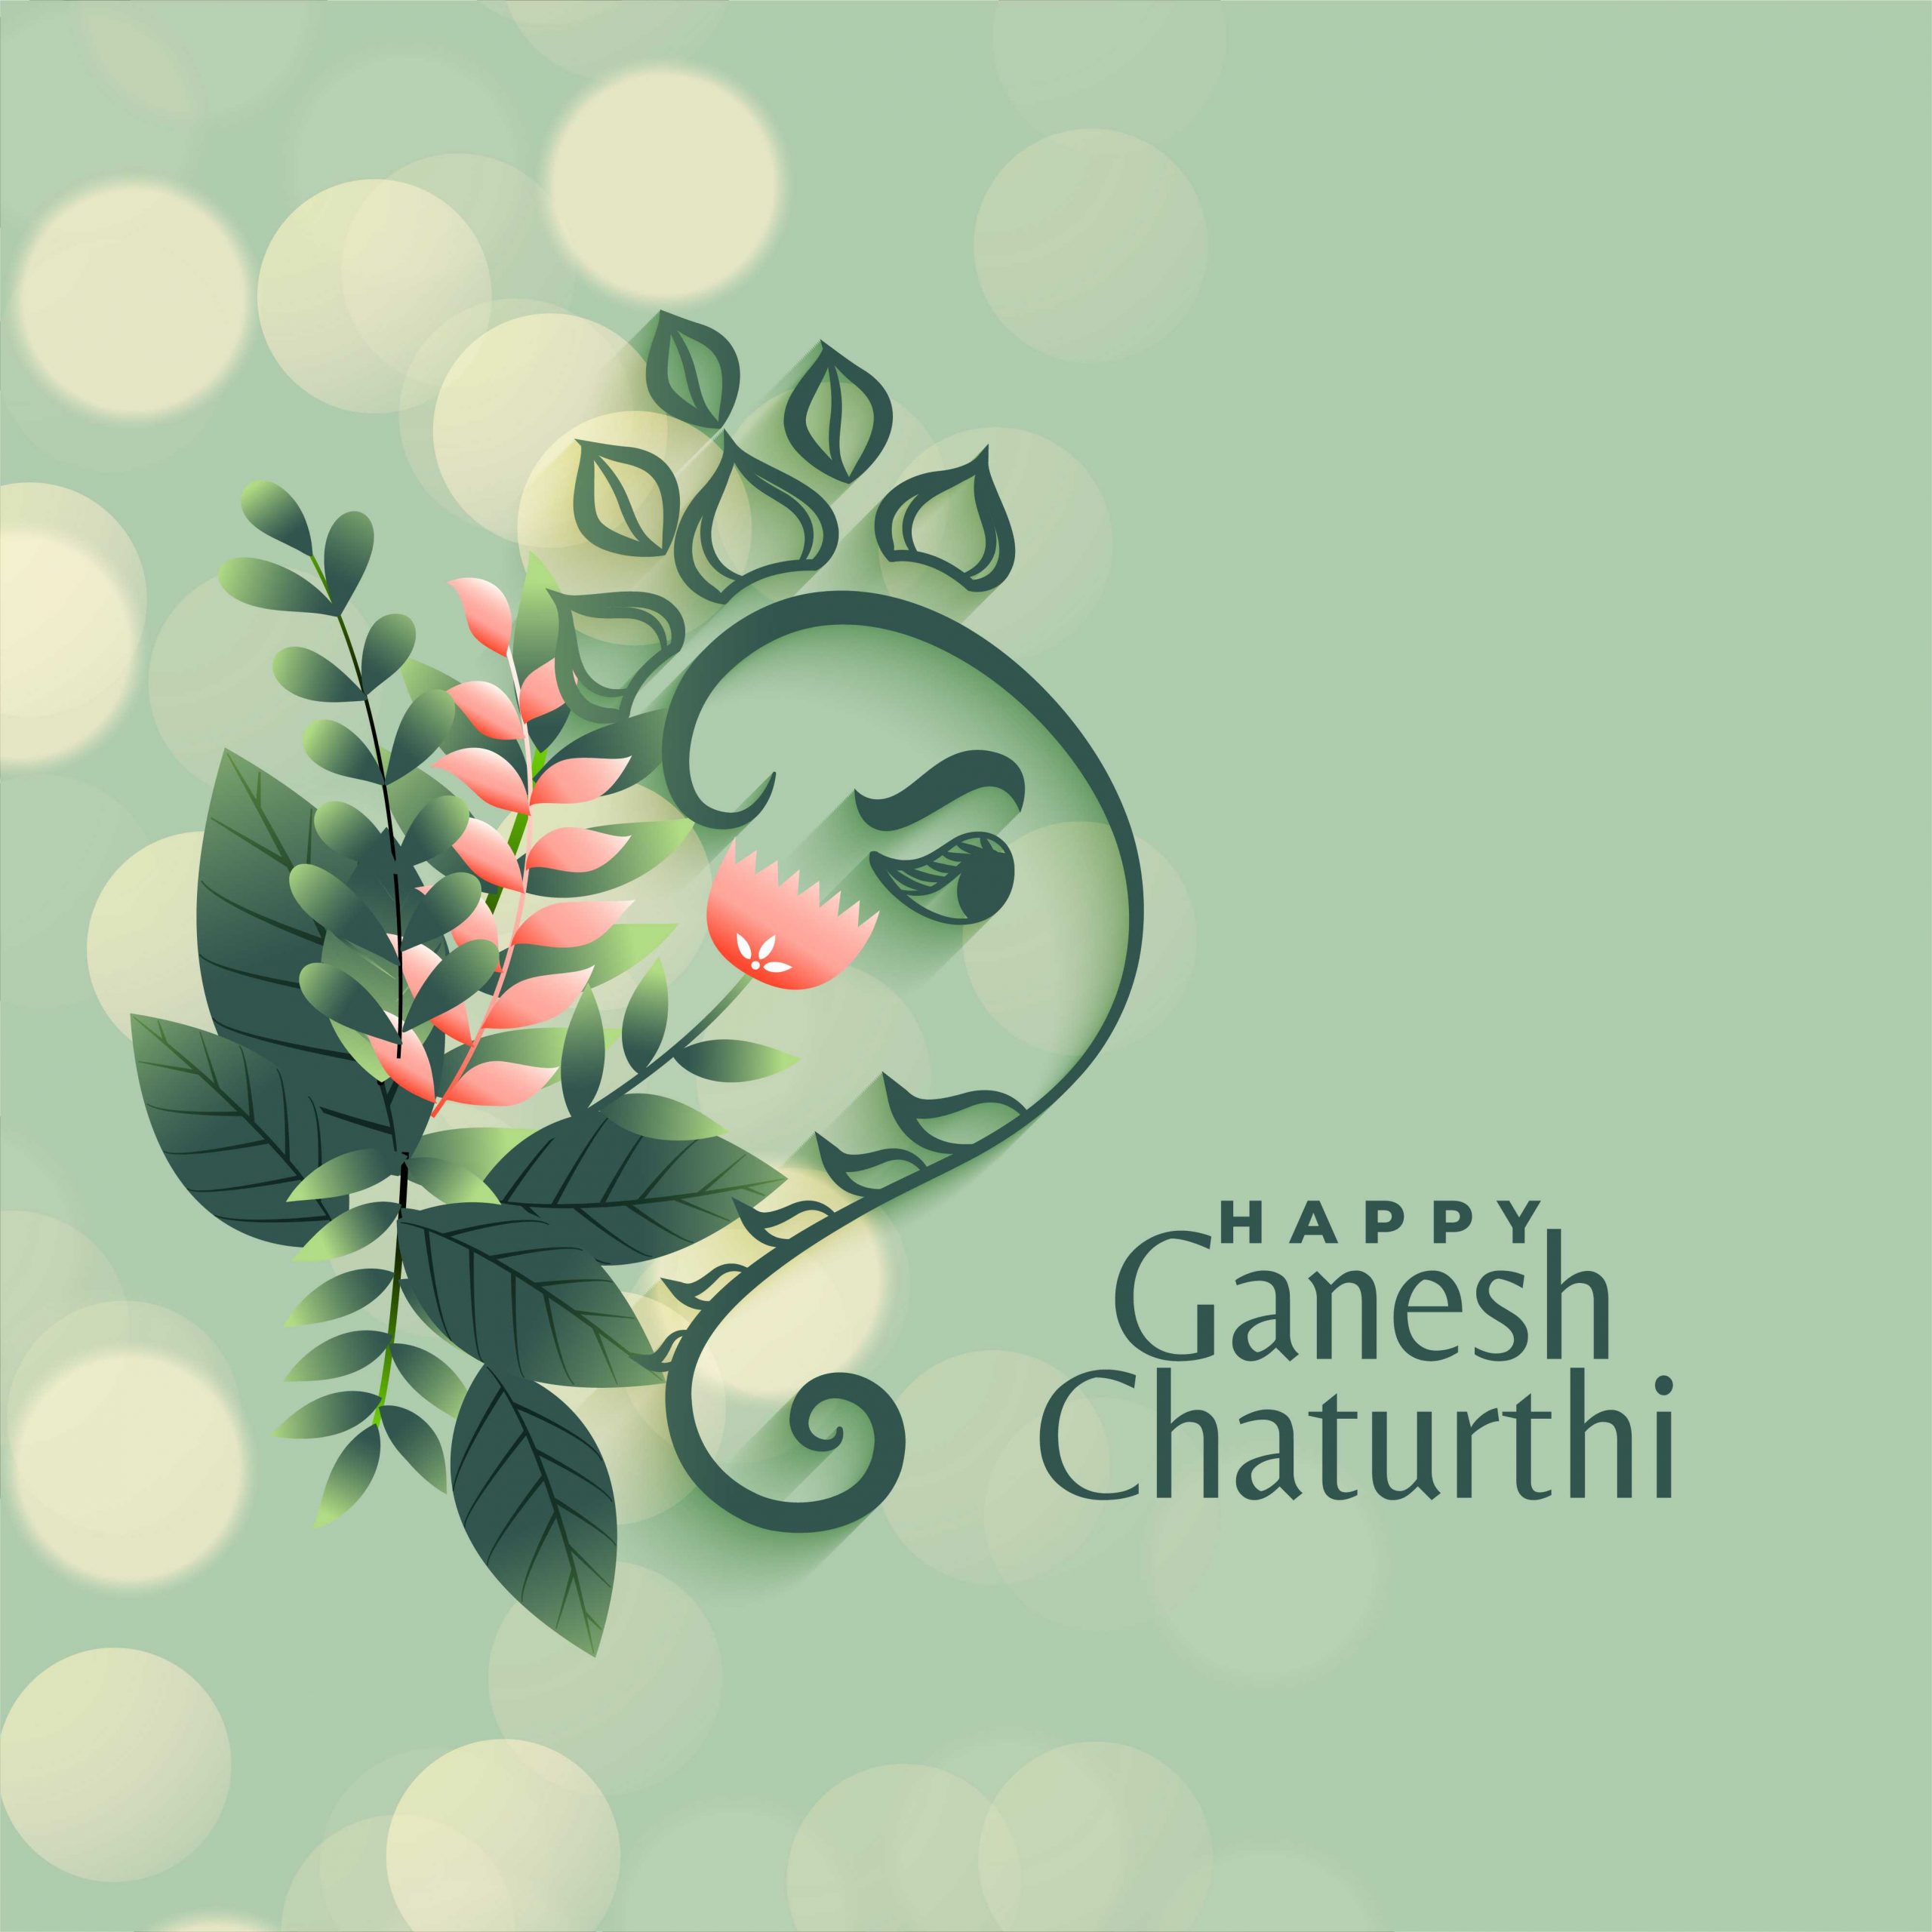 Ganesh Chaturthi pics download